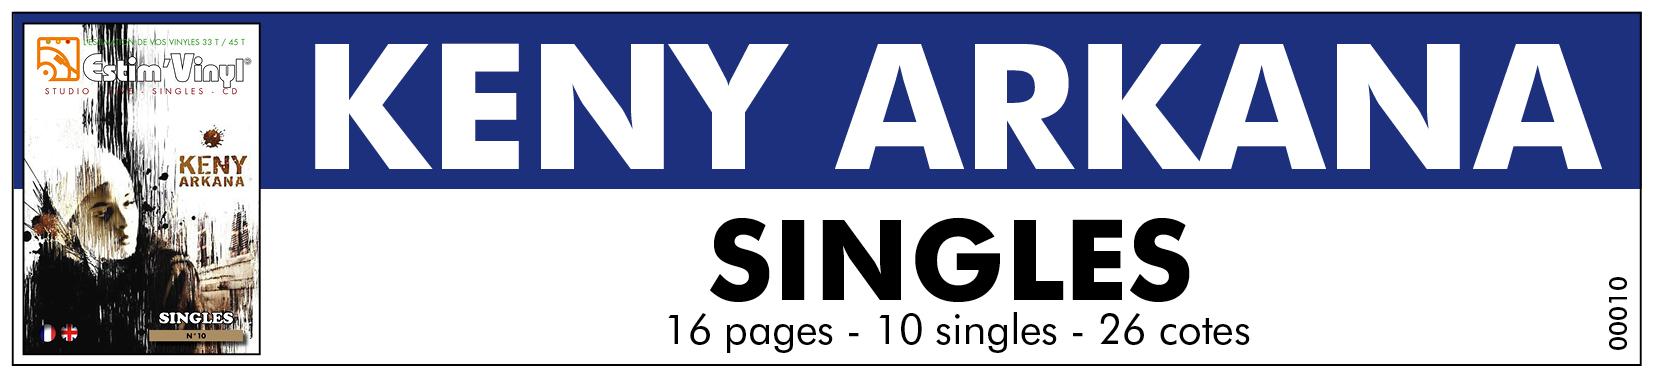 Retrouvez la discographie cotée des singles de Keny Arkana, www.estimvinyl.com